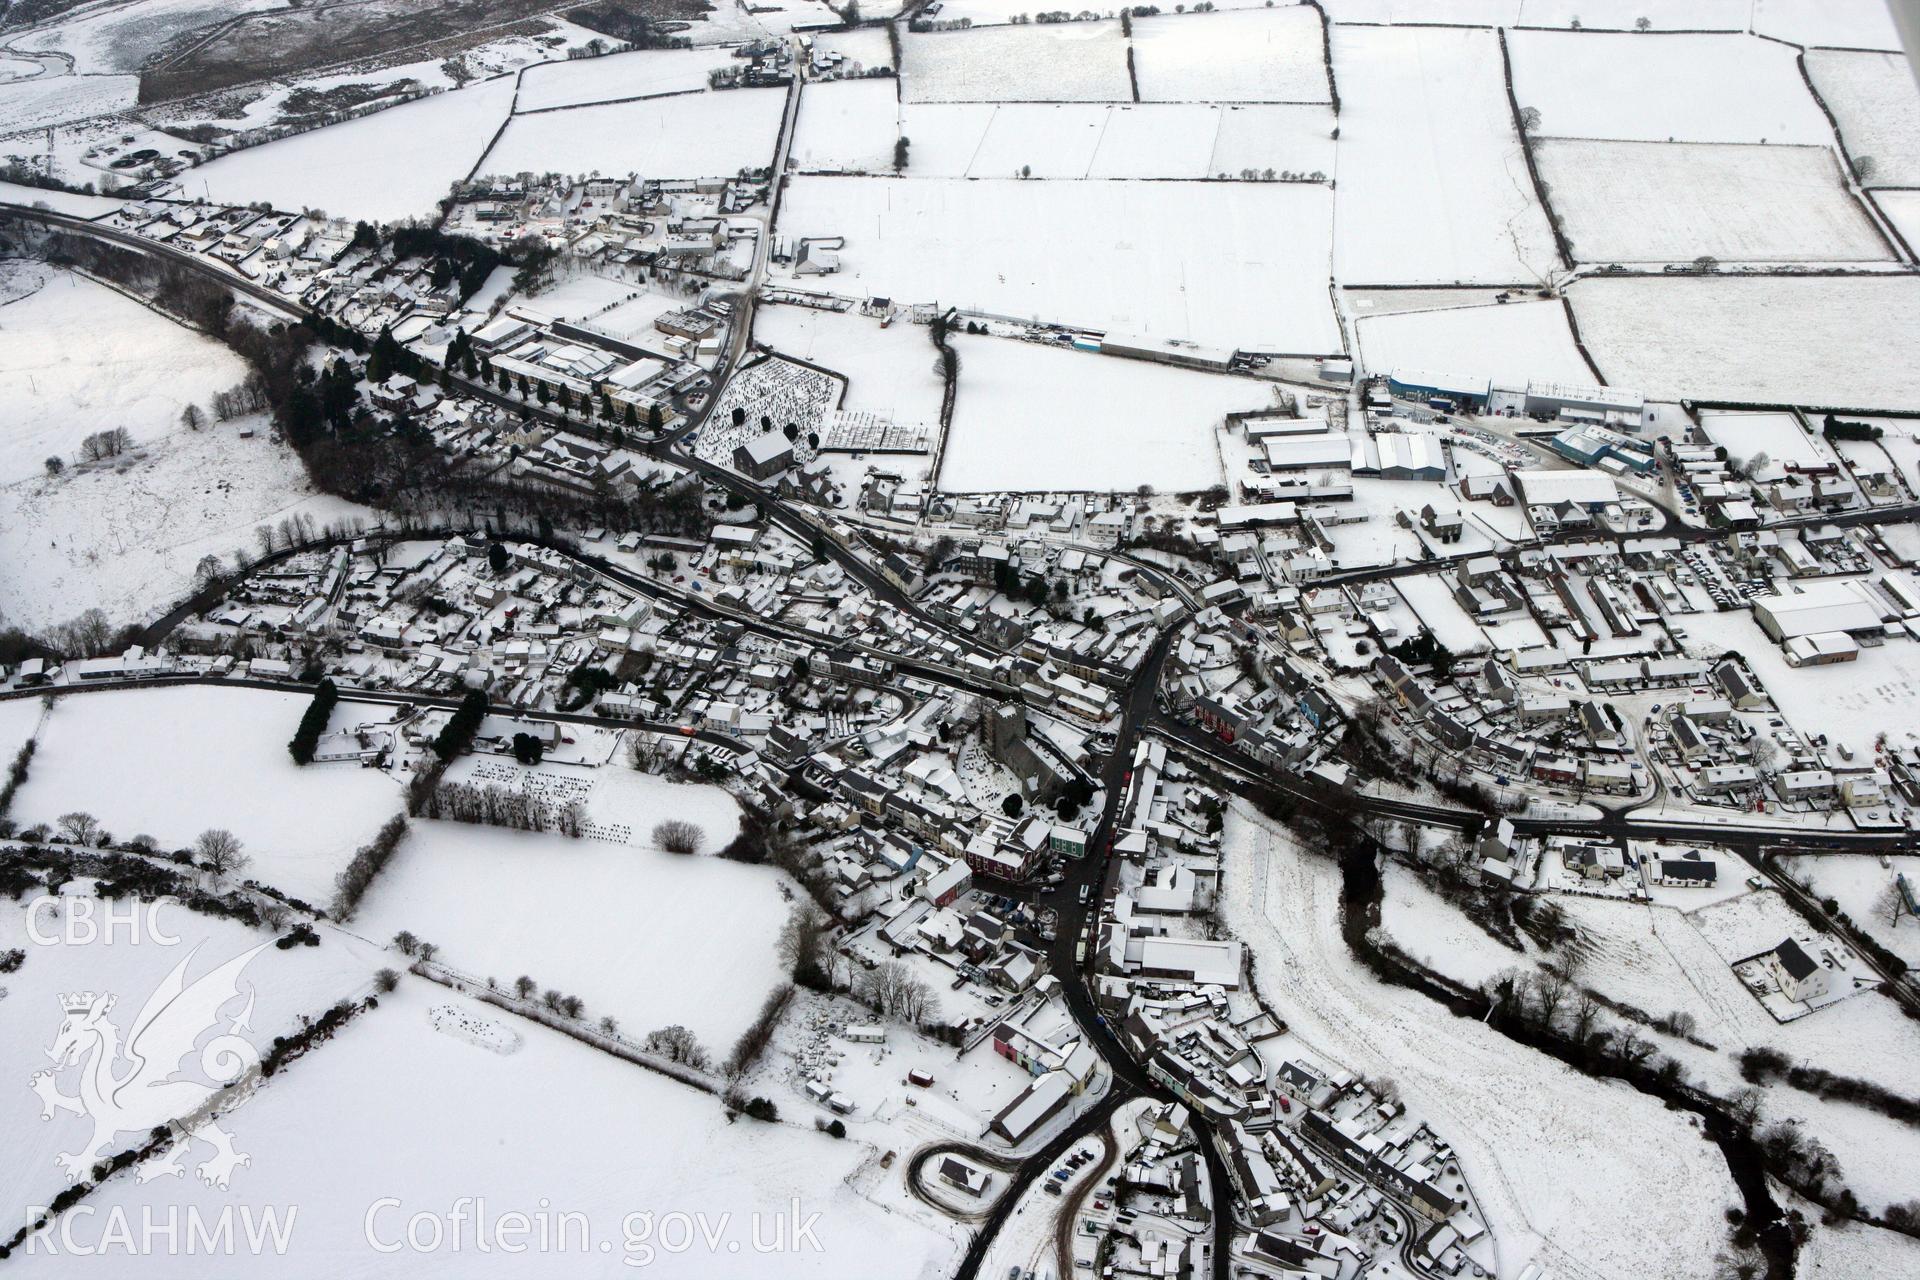 RCAHMW colour oblique aerial photograph of Tregaron under snow, by Toby Driver, 02/12/2010.